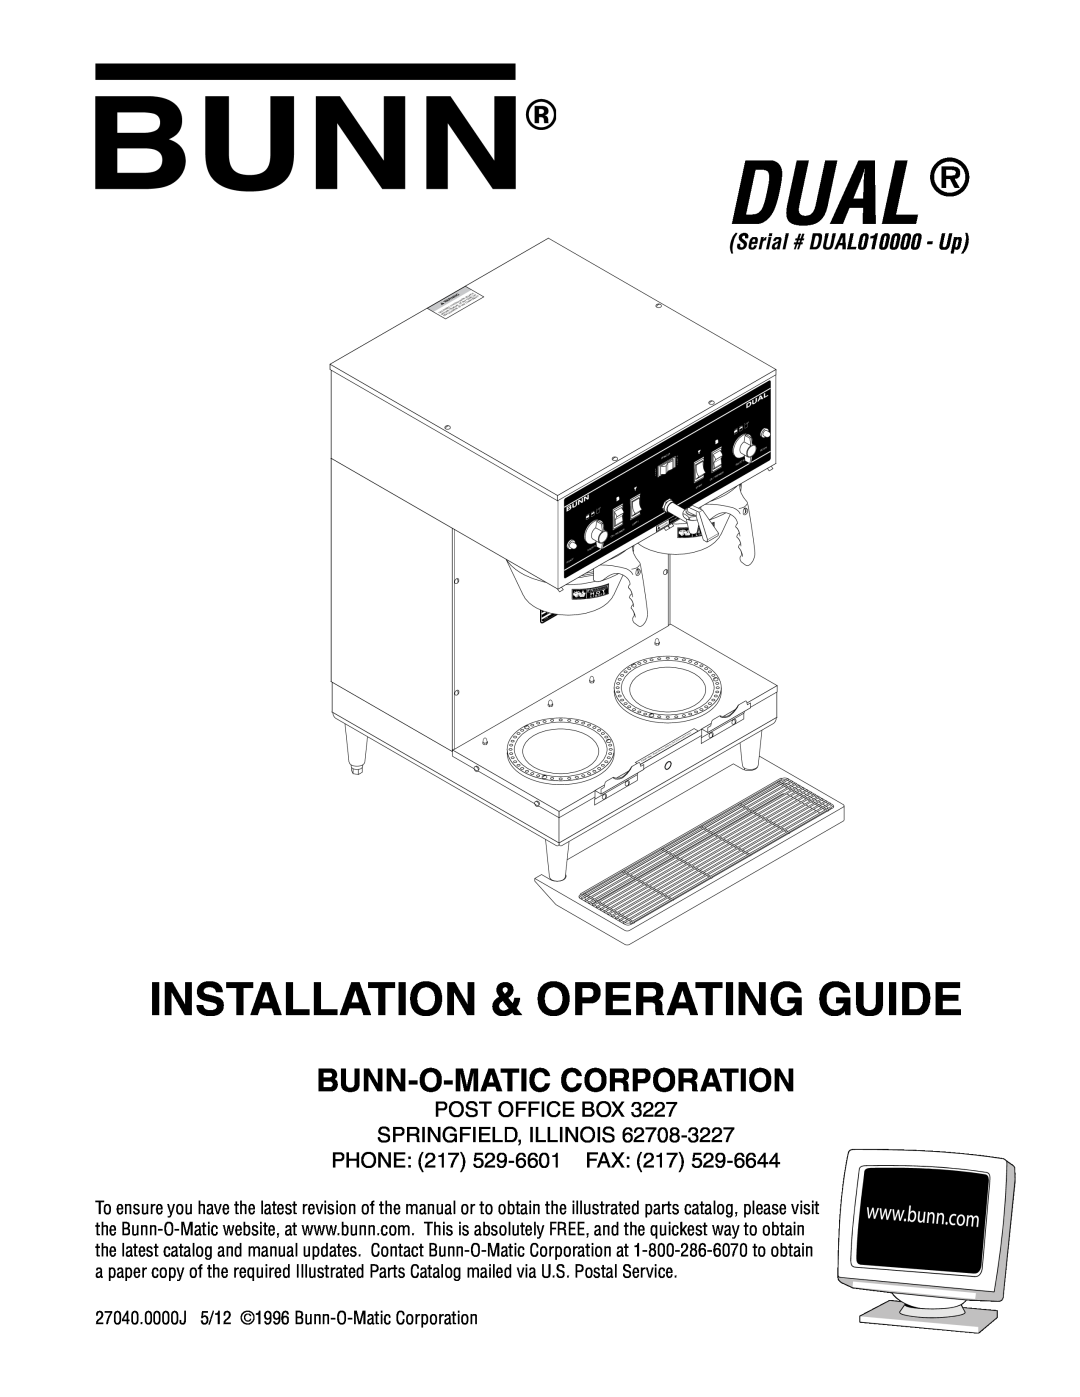 Bunn manual Serial # DUAL010000 - Up, Dual, Installation & Operating Guide, Bunn-O-Maticcorporation 